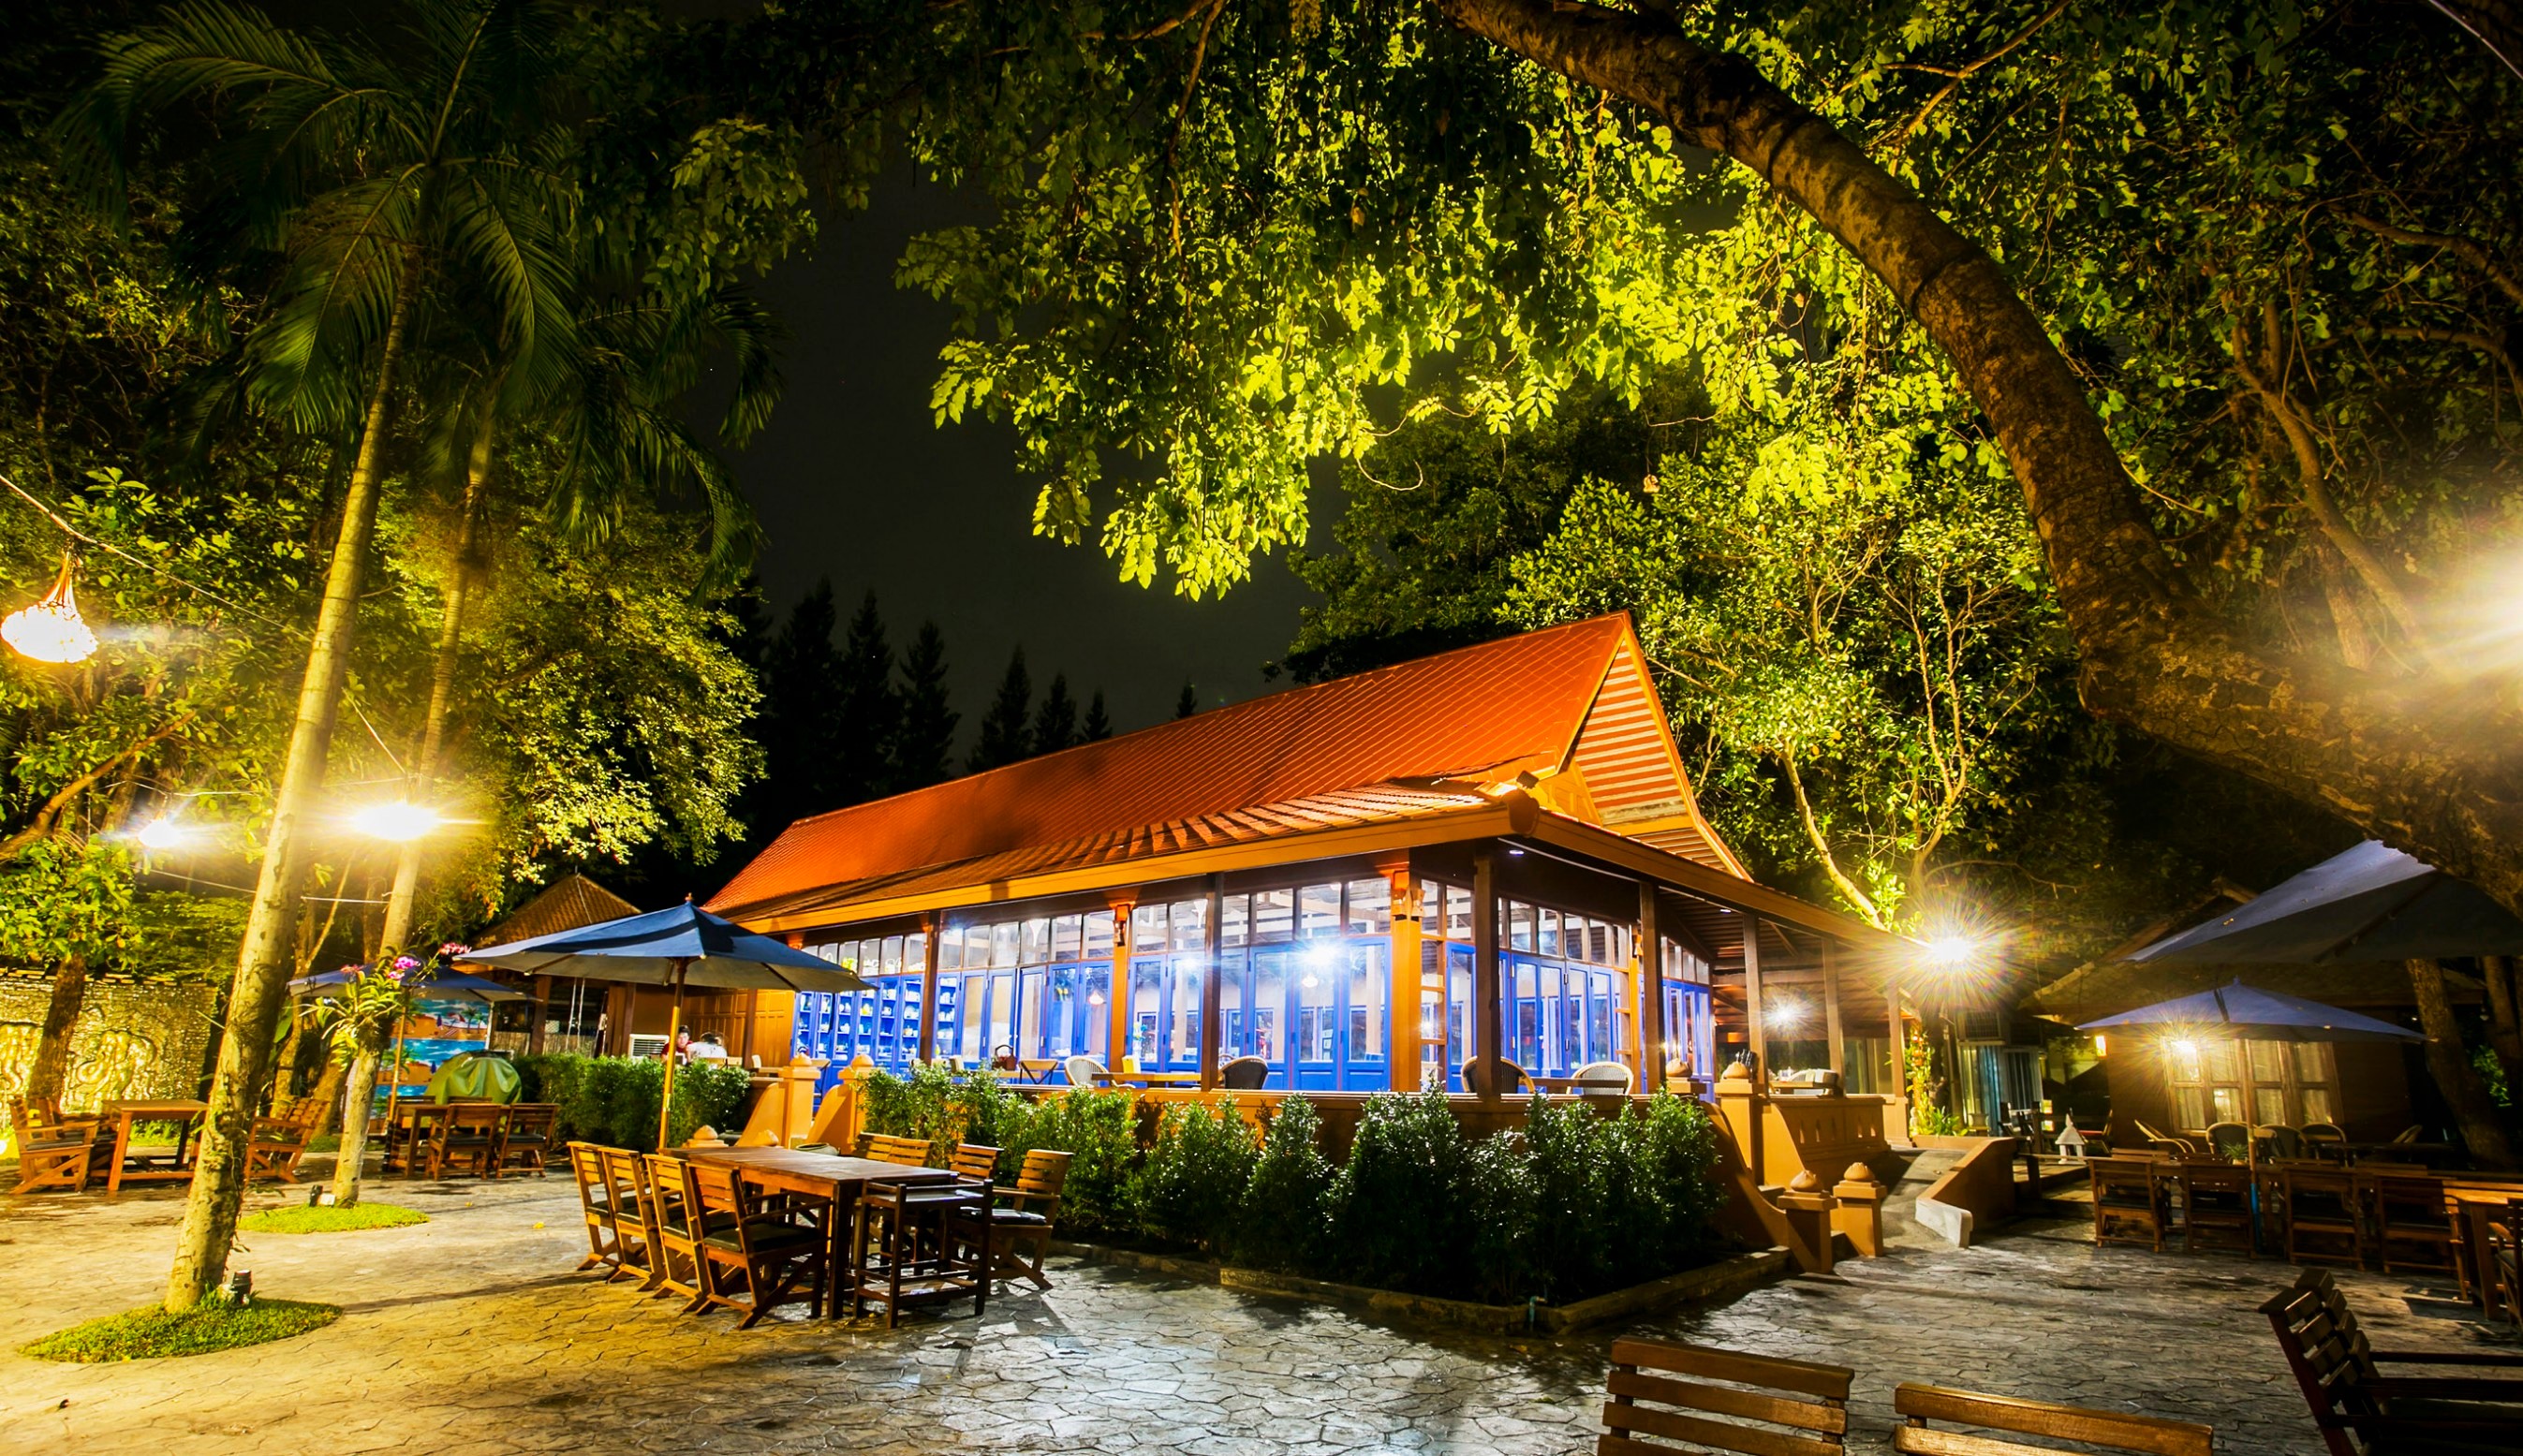 MUST SEE: Rachawadee Resort and Hotel